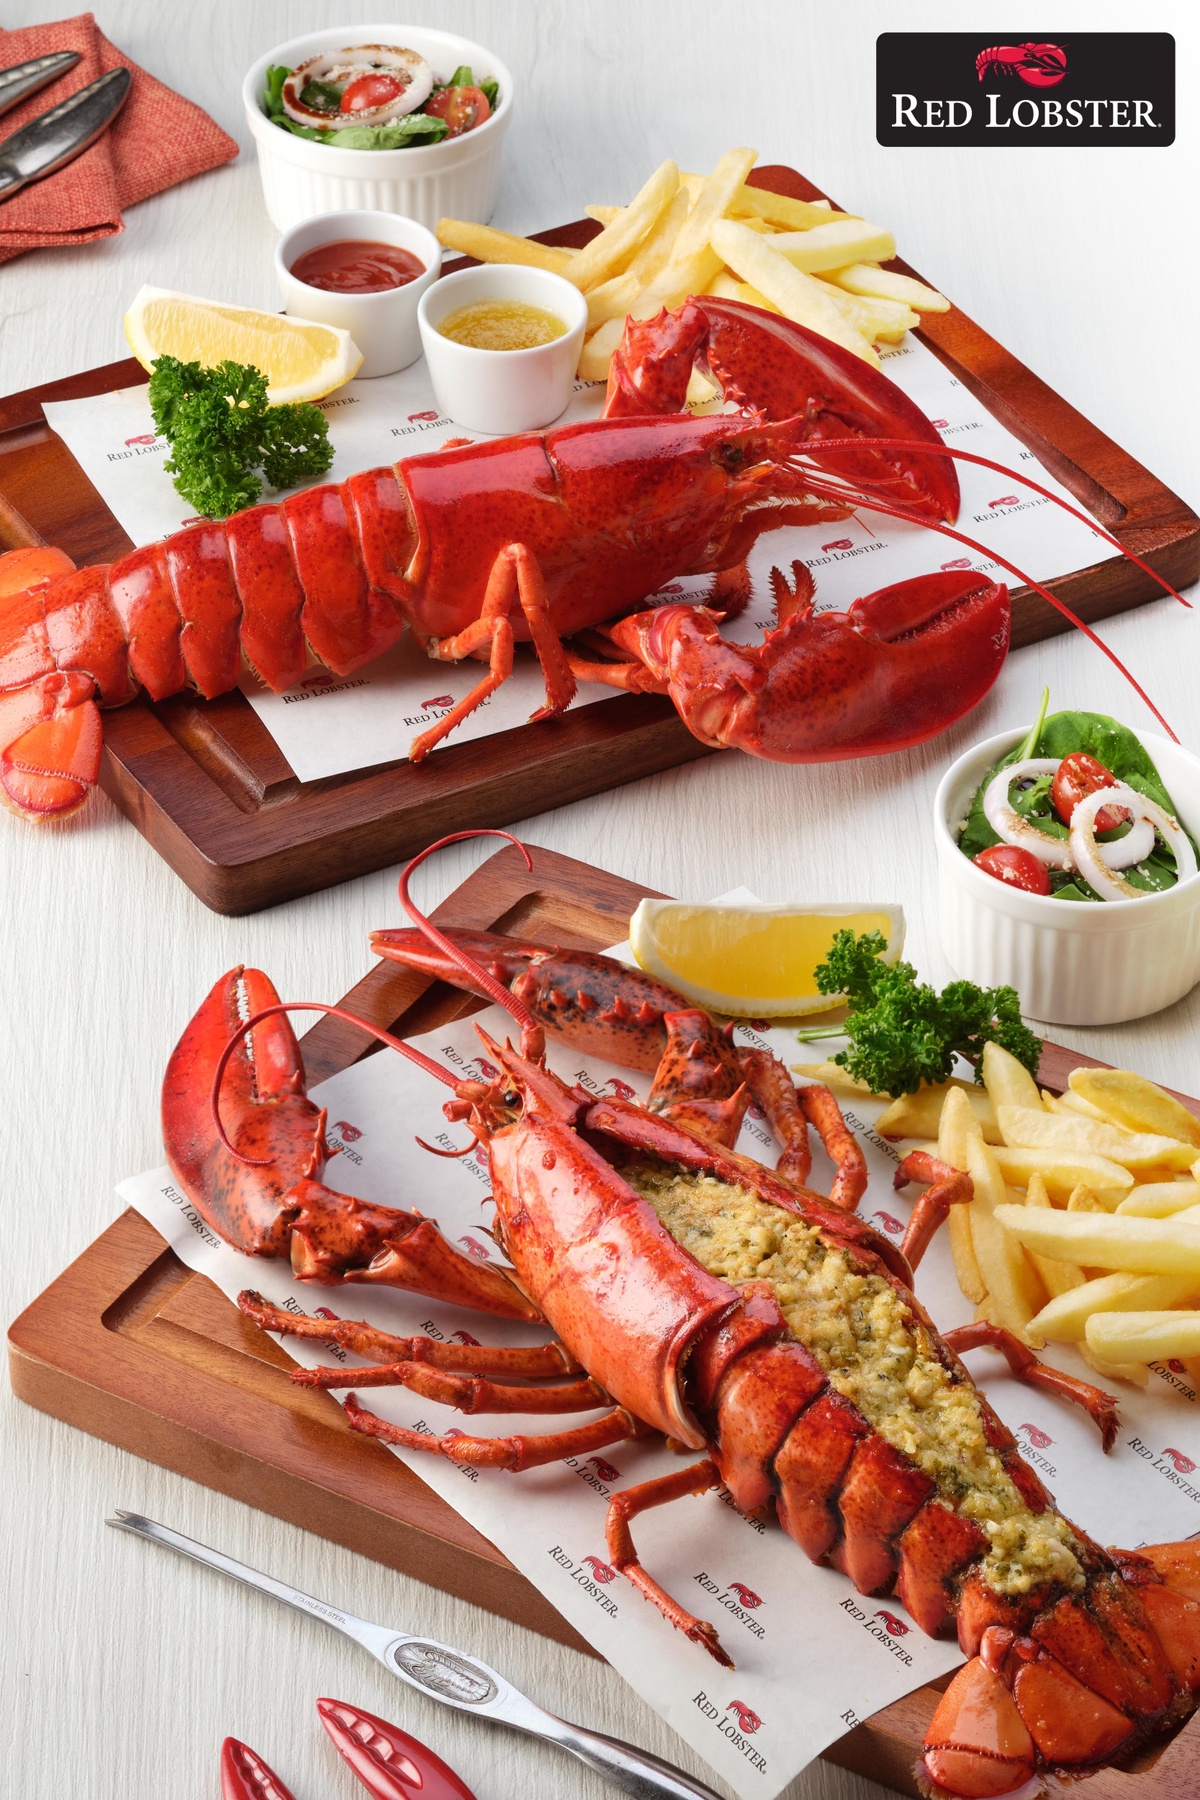 Red Lobster ร้านอาหารทะเลชื่อดังจากสหรัฐอเมริกา เตรียมเปิดในไทย ที่ศูนย์ประชุมแห่งชาติสิริกิติ์ 12 กันยายนนี้